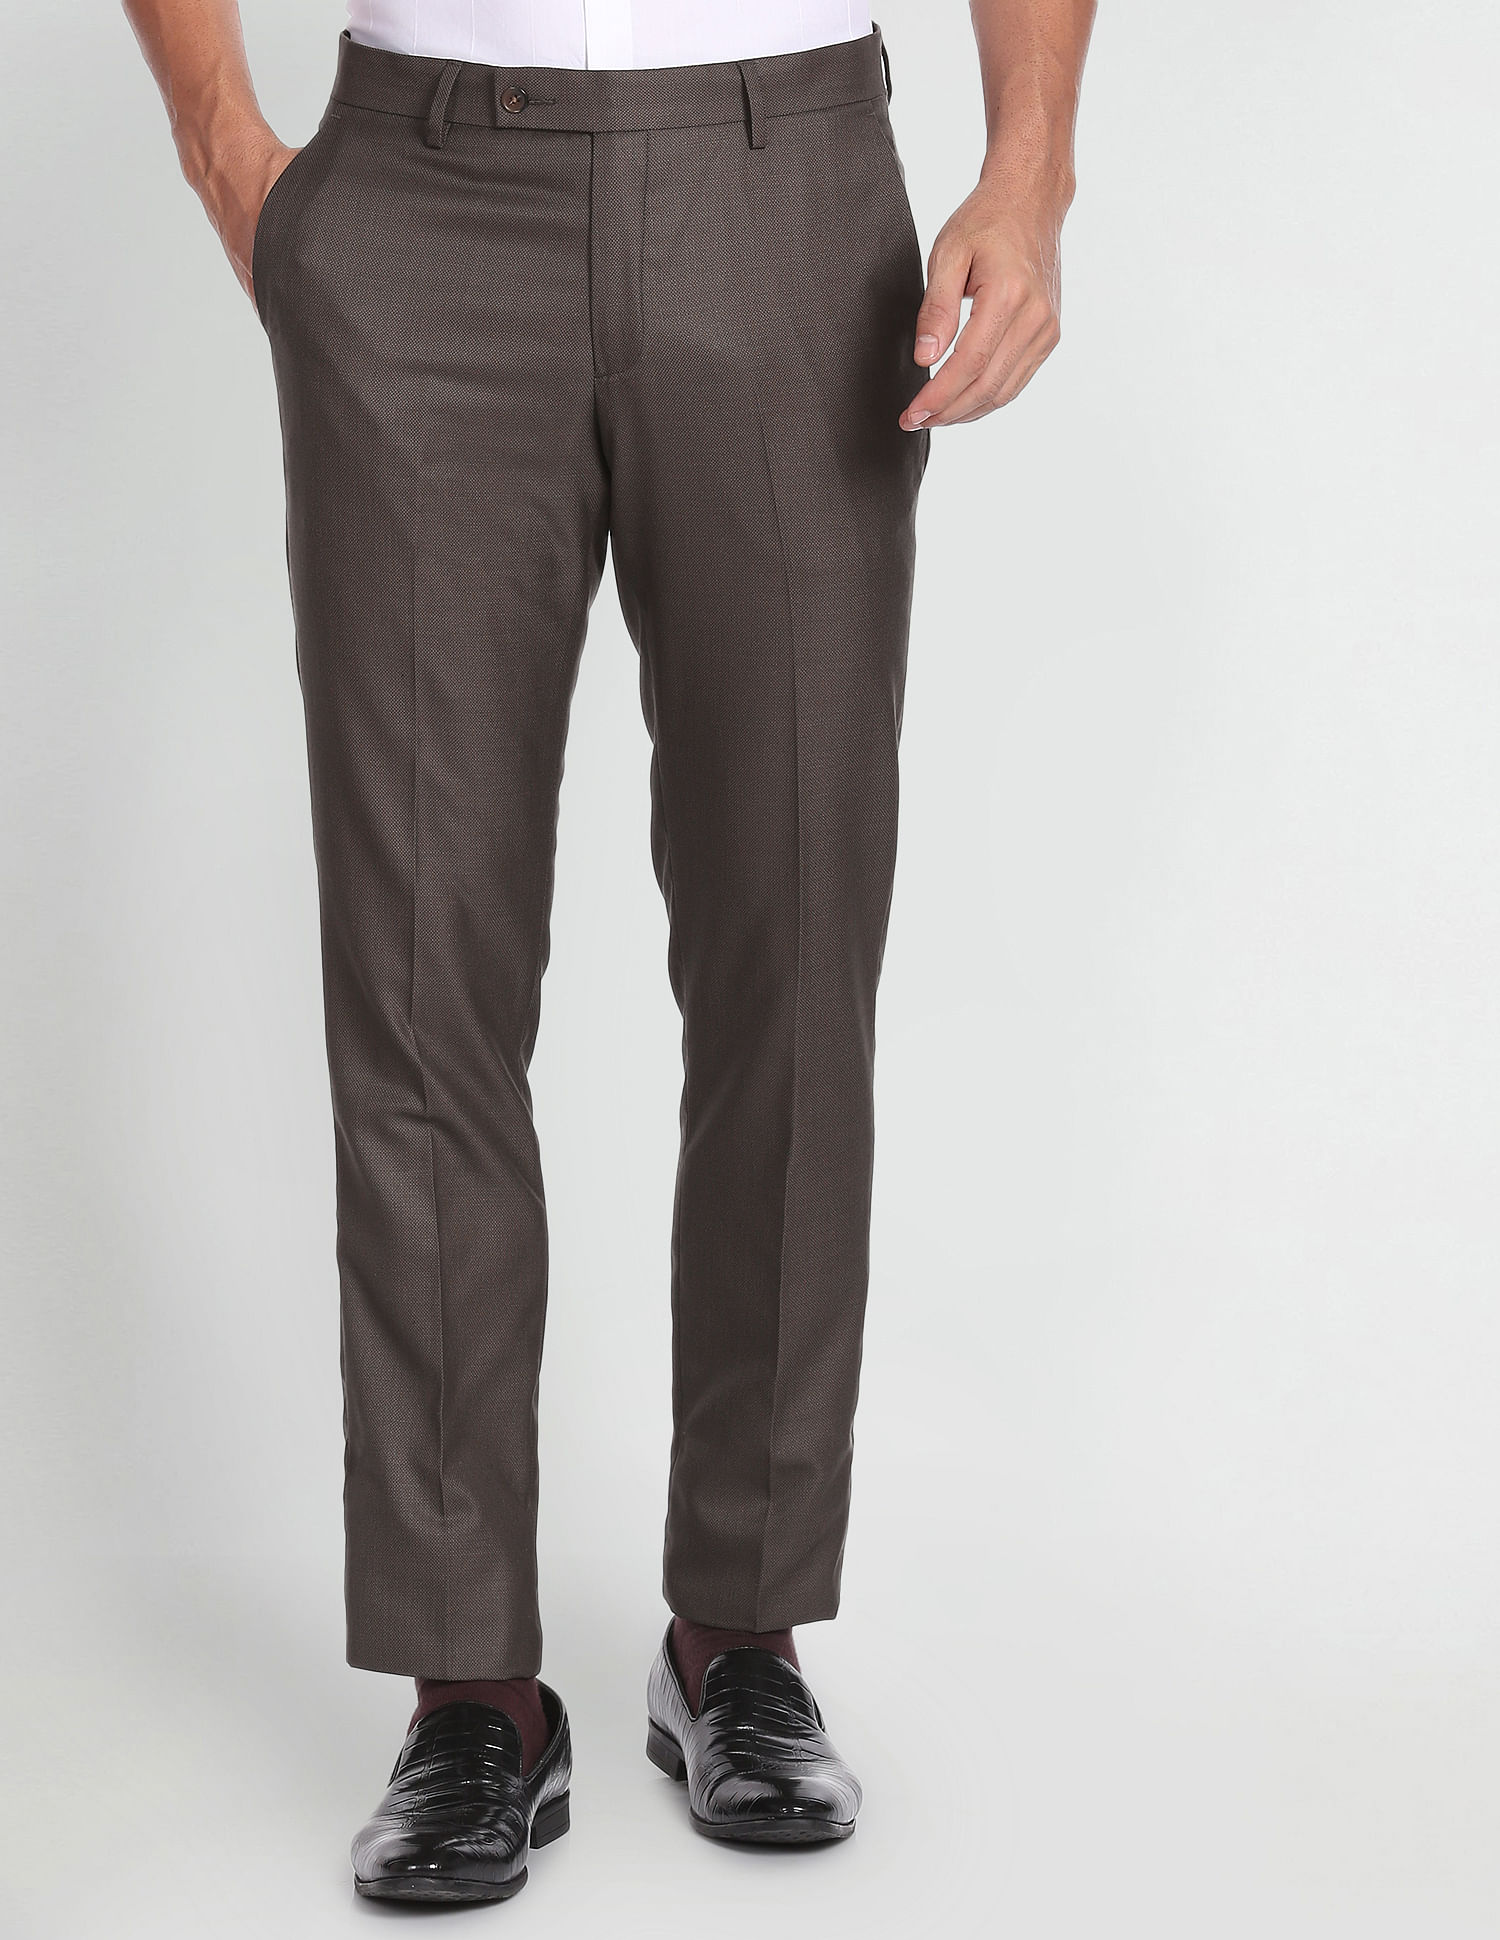 Arrow Smart Fit Trousers - Buy Arrow Smart Fit Trousers online in India